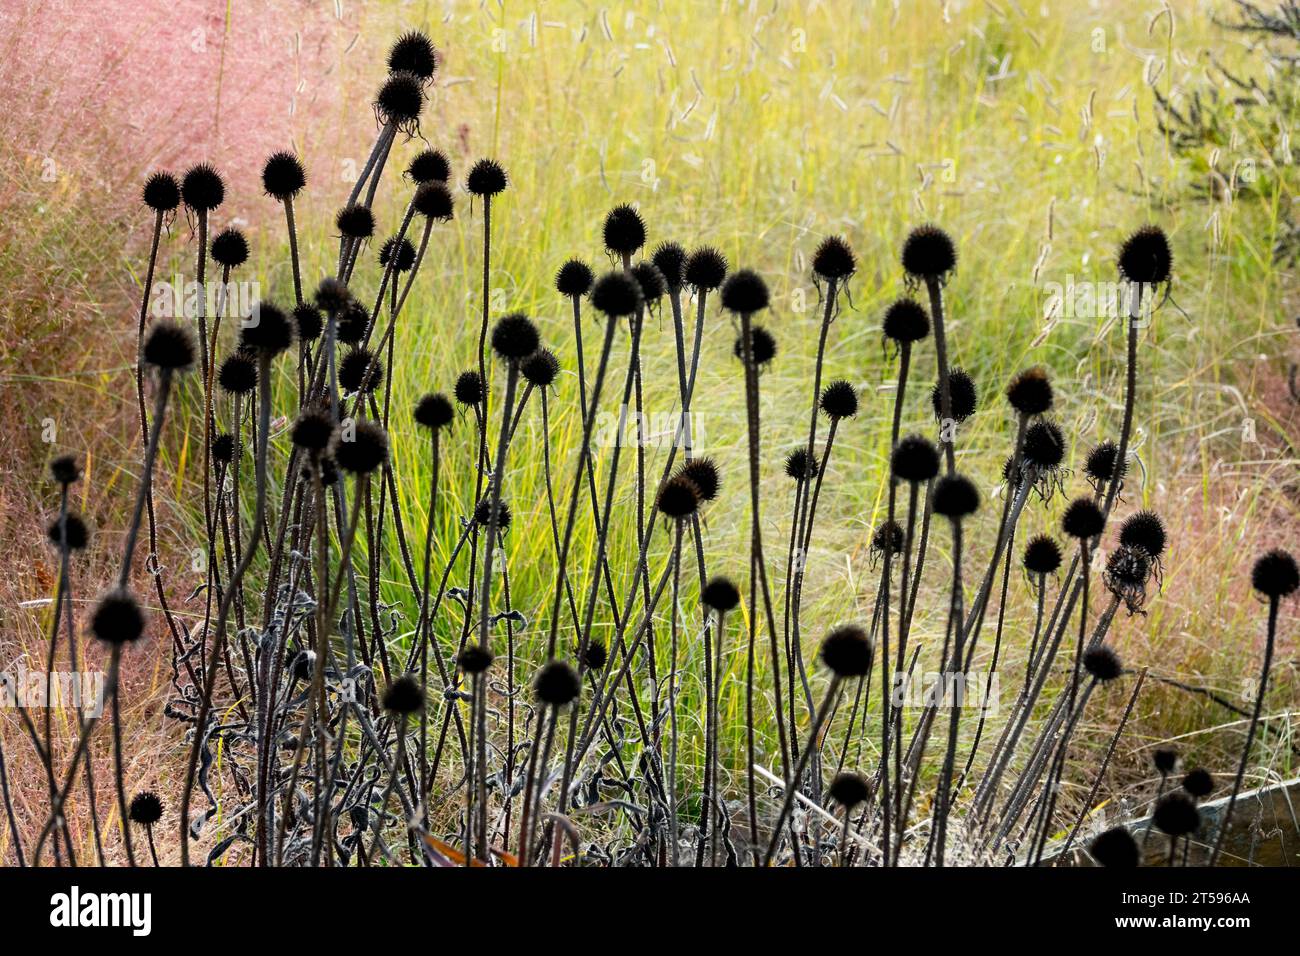 Deadheads, coneflowers on Stems, Dried, Seedheads, Echinacea, Grass, Meadow, Garden, echinaceas Stock Photo